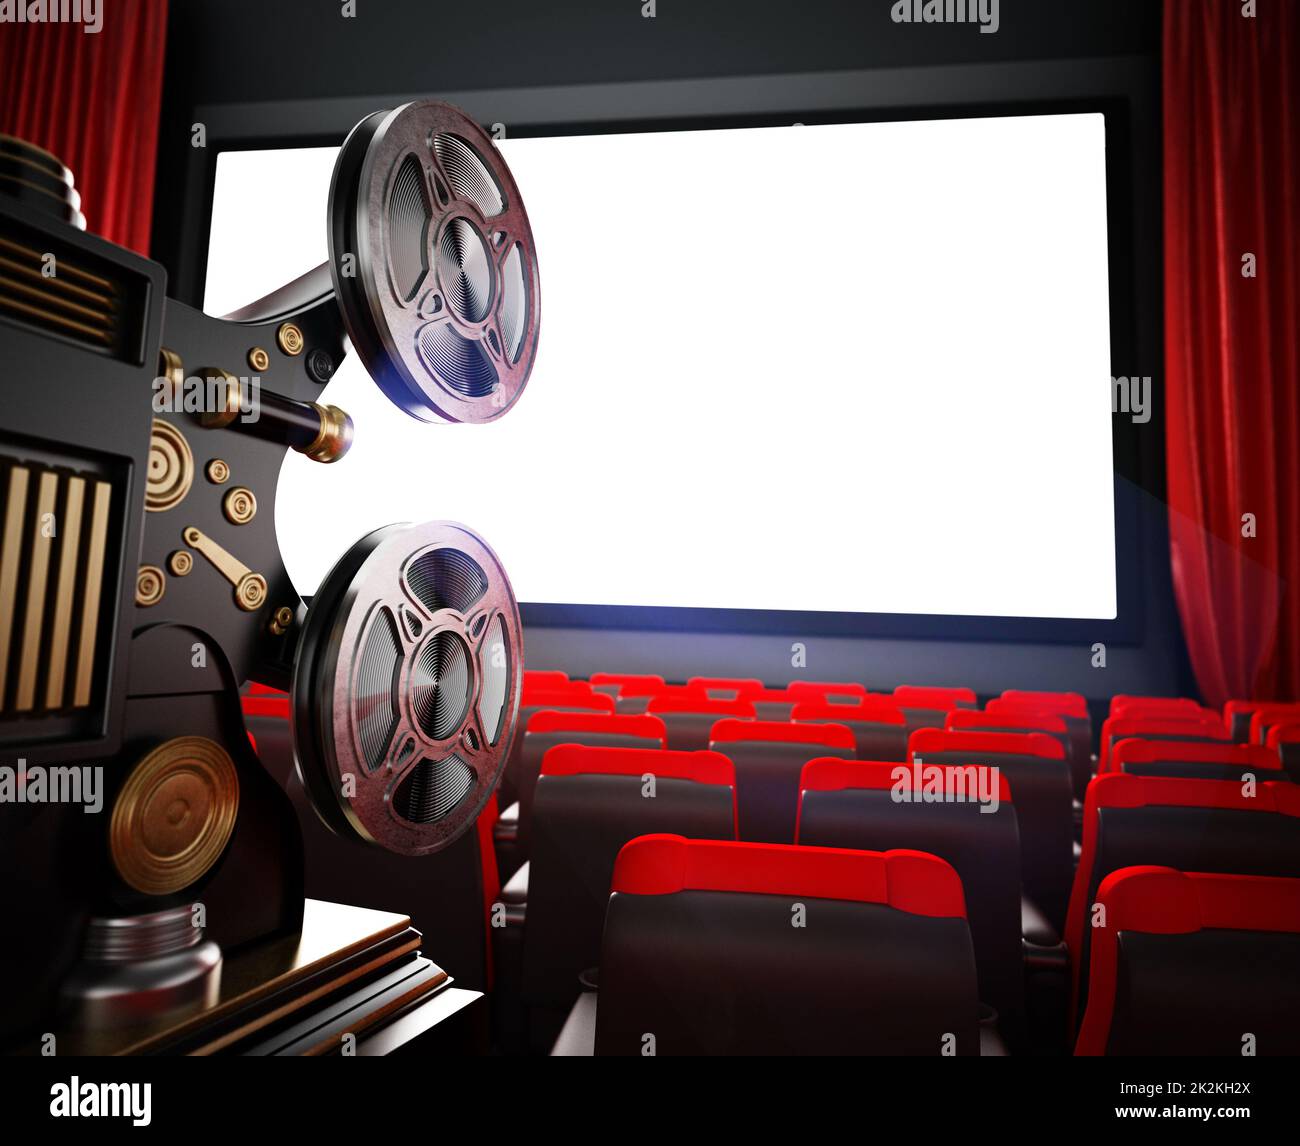 Vintage cinema projector in cinema theater. 3D illustration Stock Photo